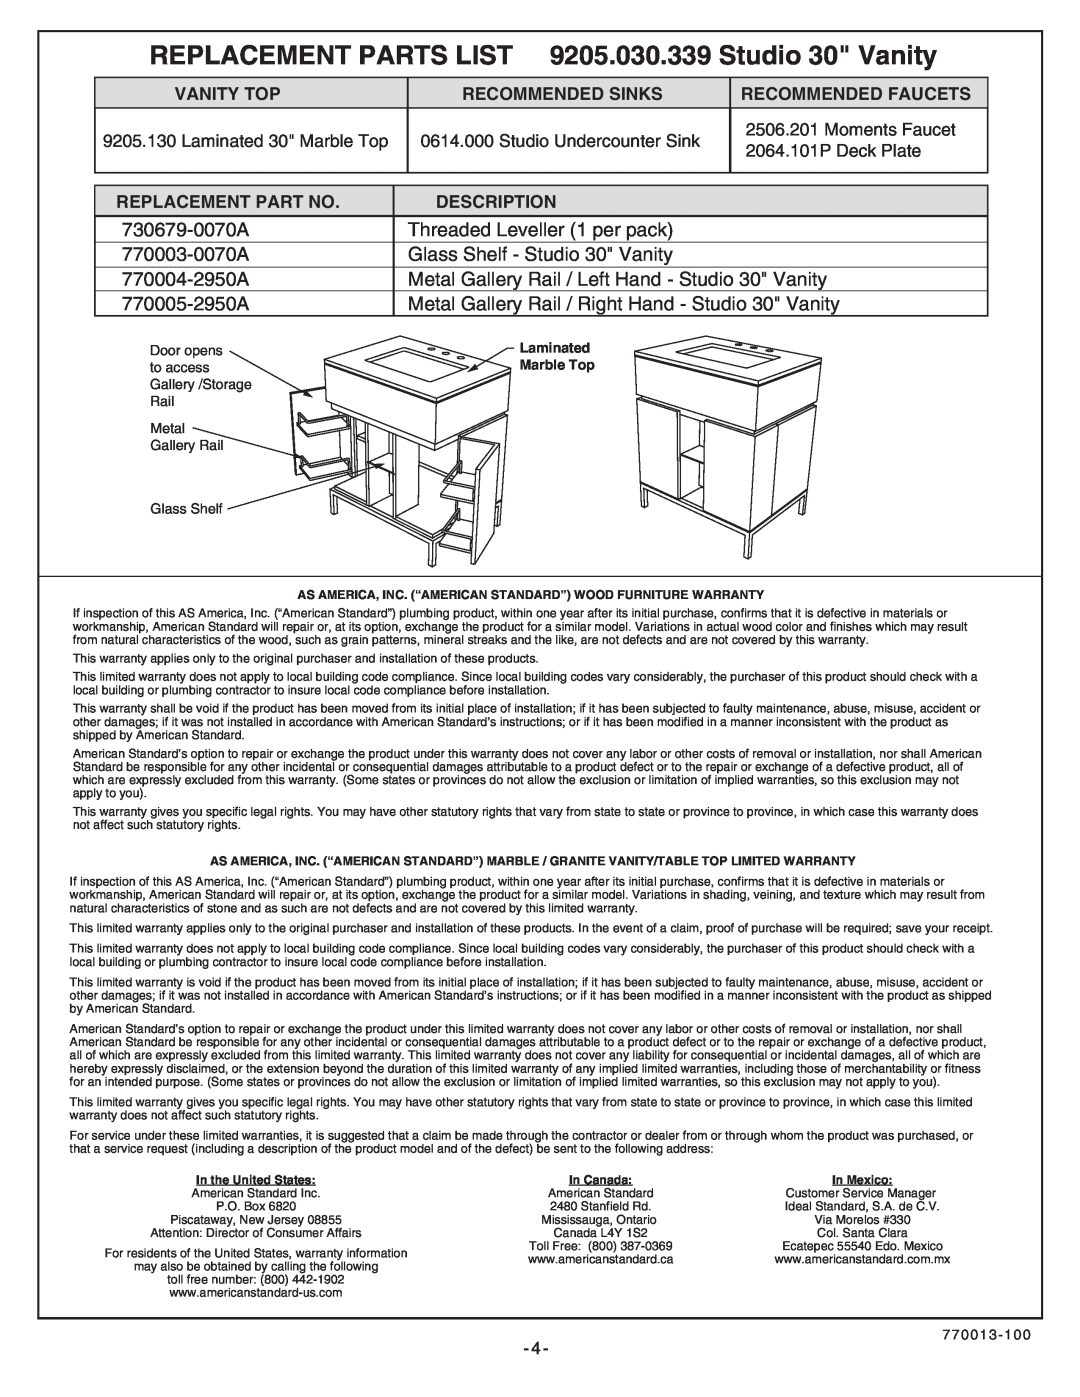 American Standard 9205.030.339 Replacement Part No, Description, 730679-0070A, Threaded Leveller 1 per pack, 770003-0070A 